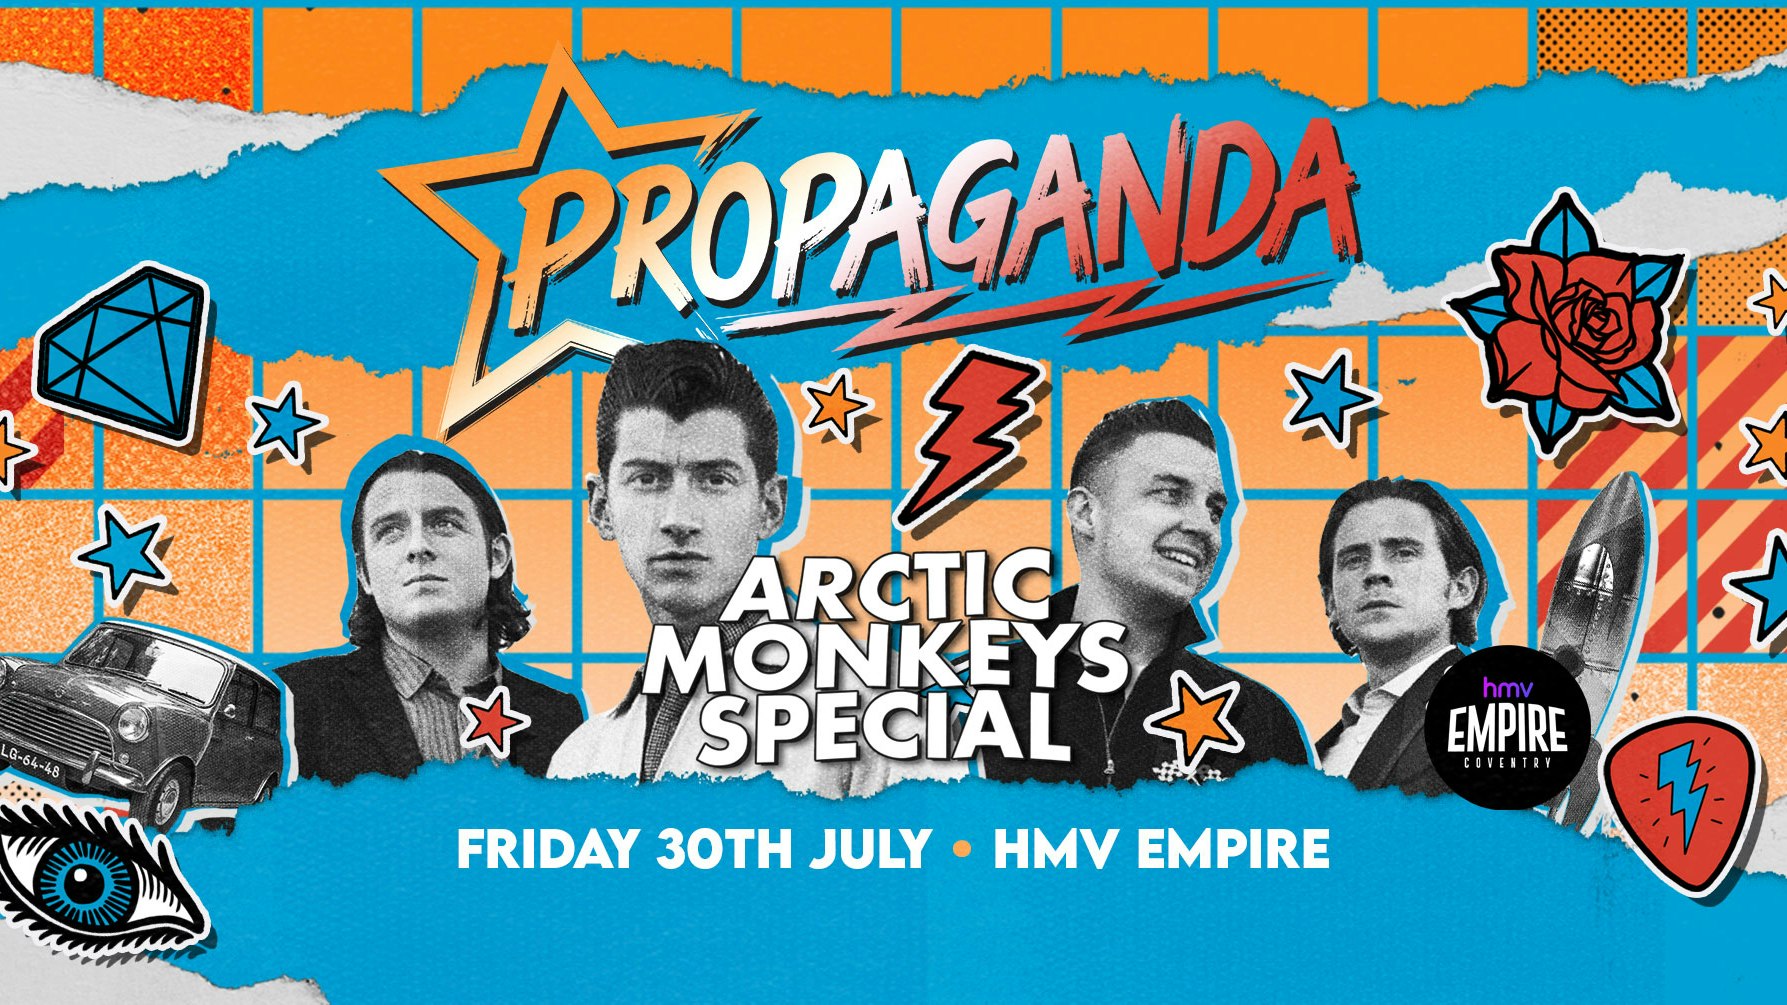 Propaganda Coventry – Arctic Monkeys Special